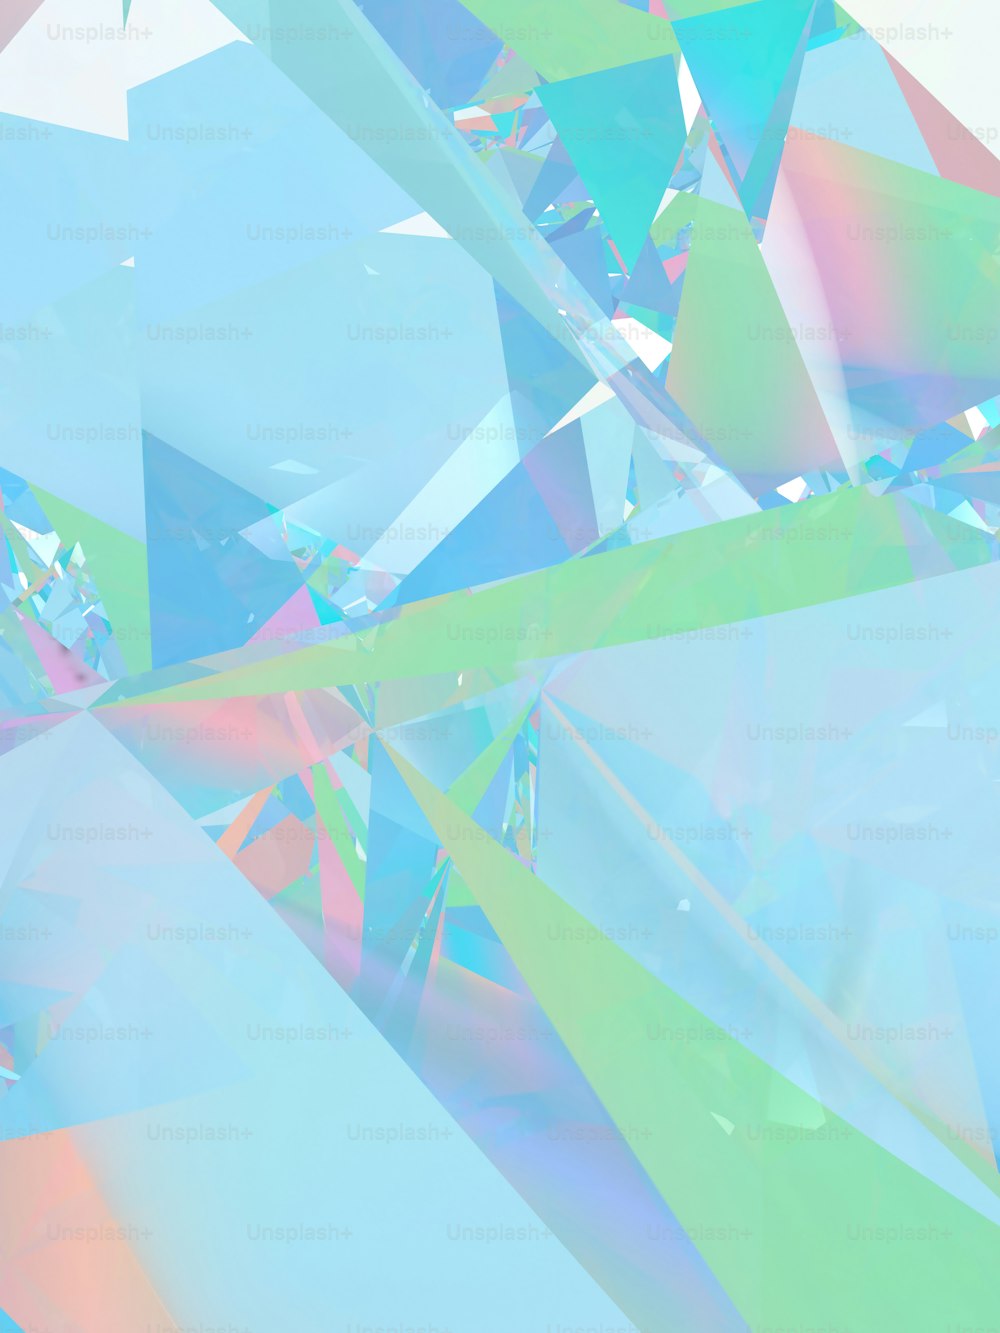 a multicolored image of a diamond like object